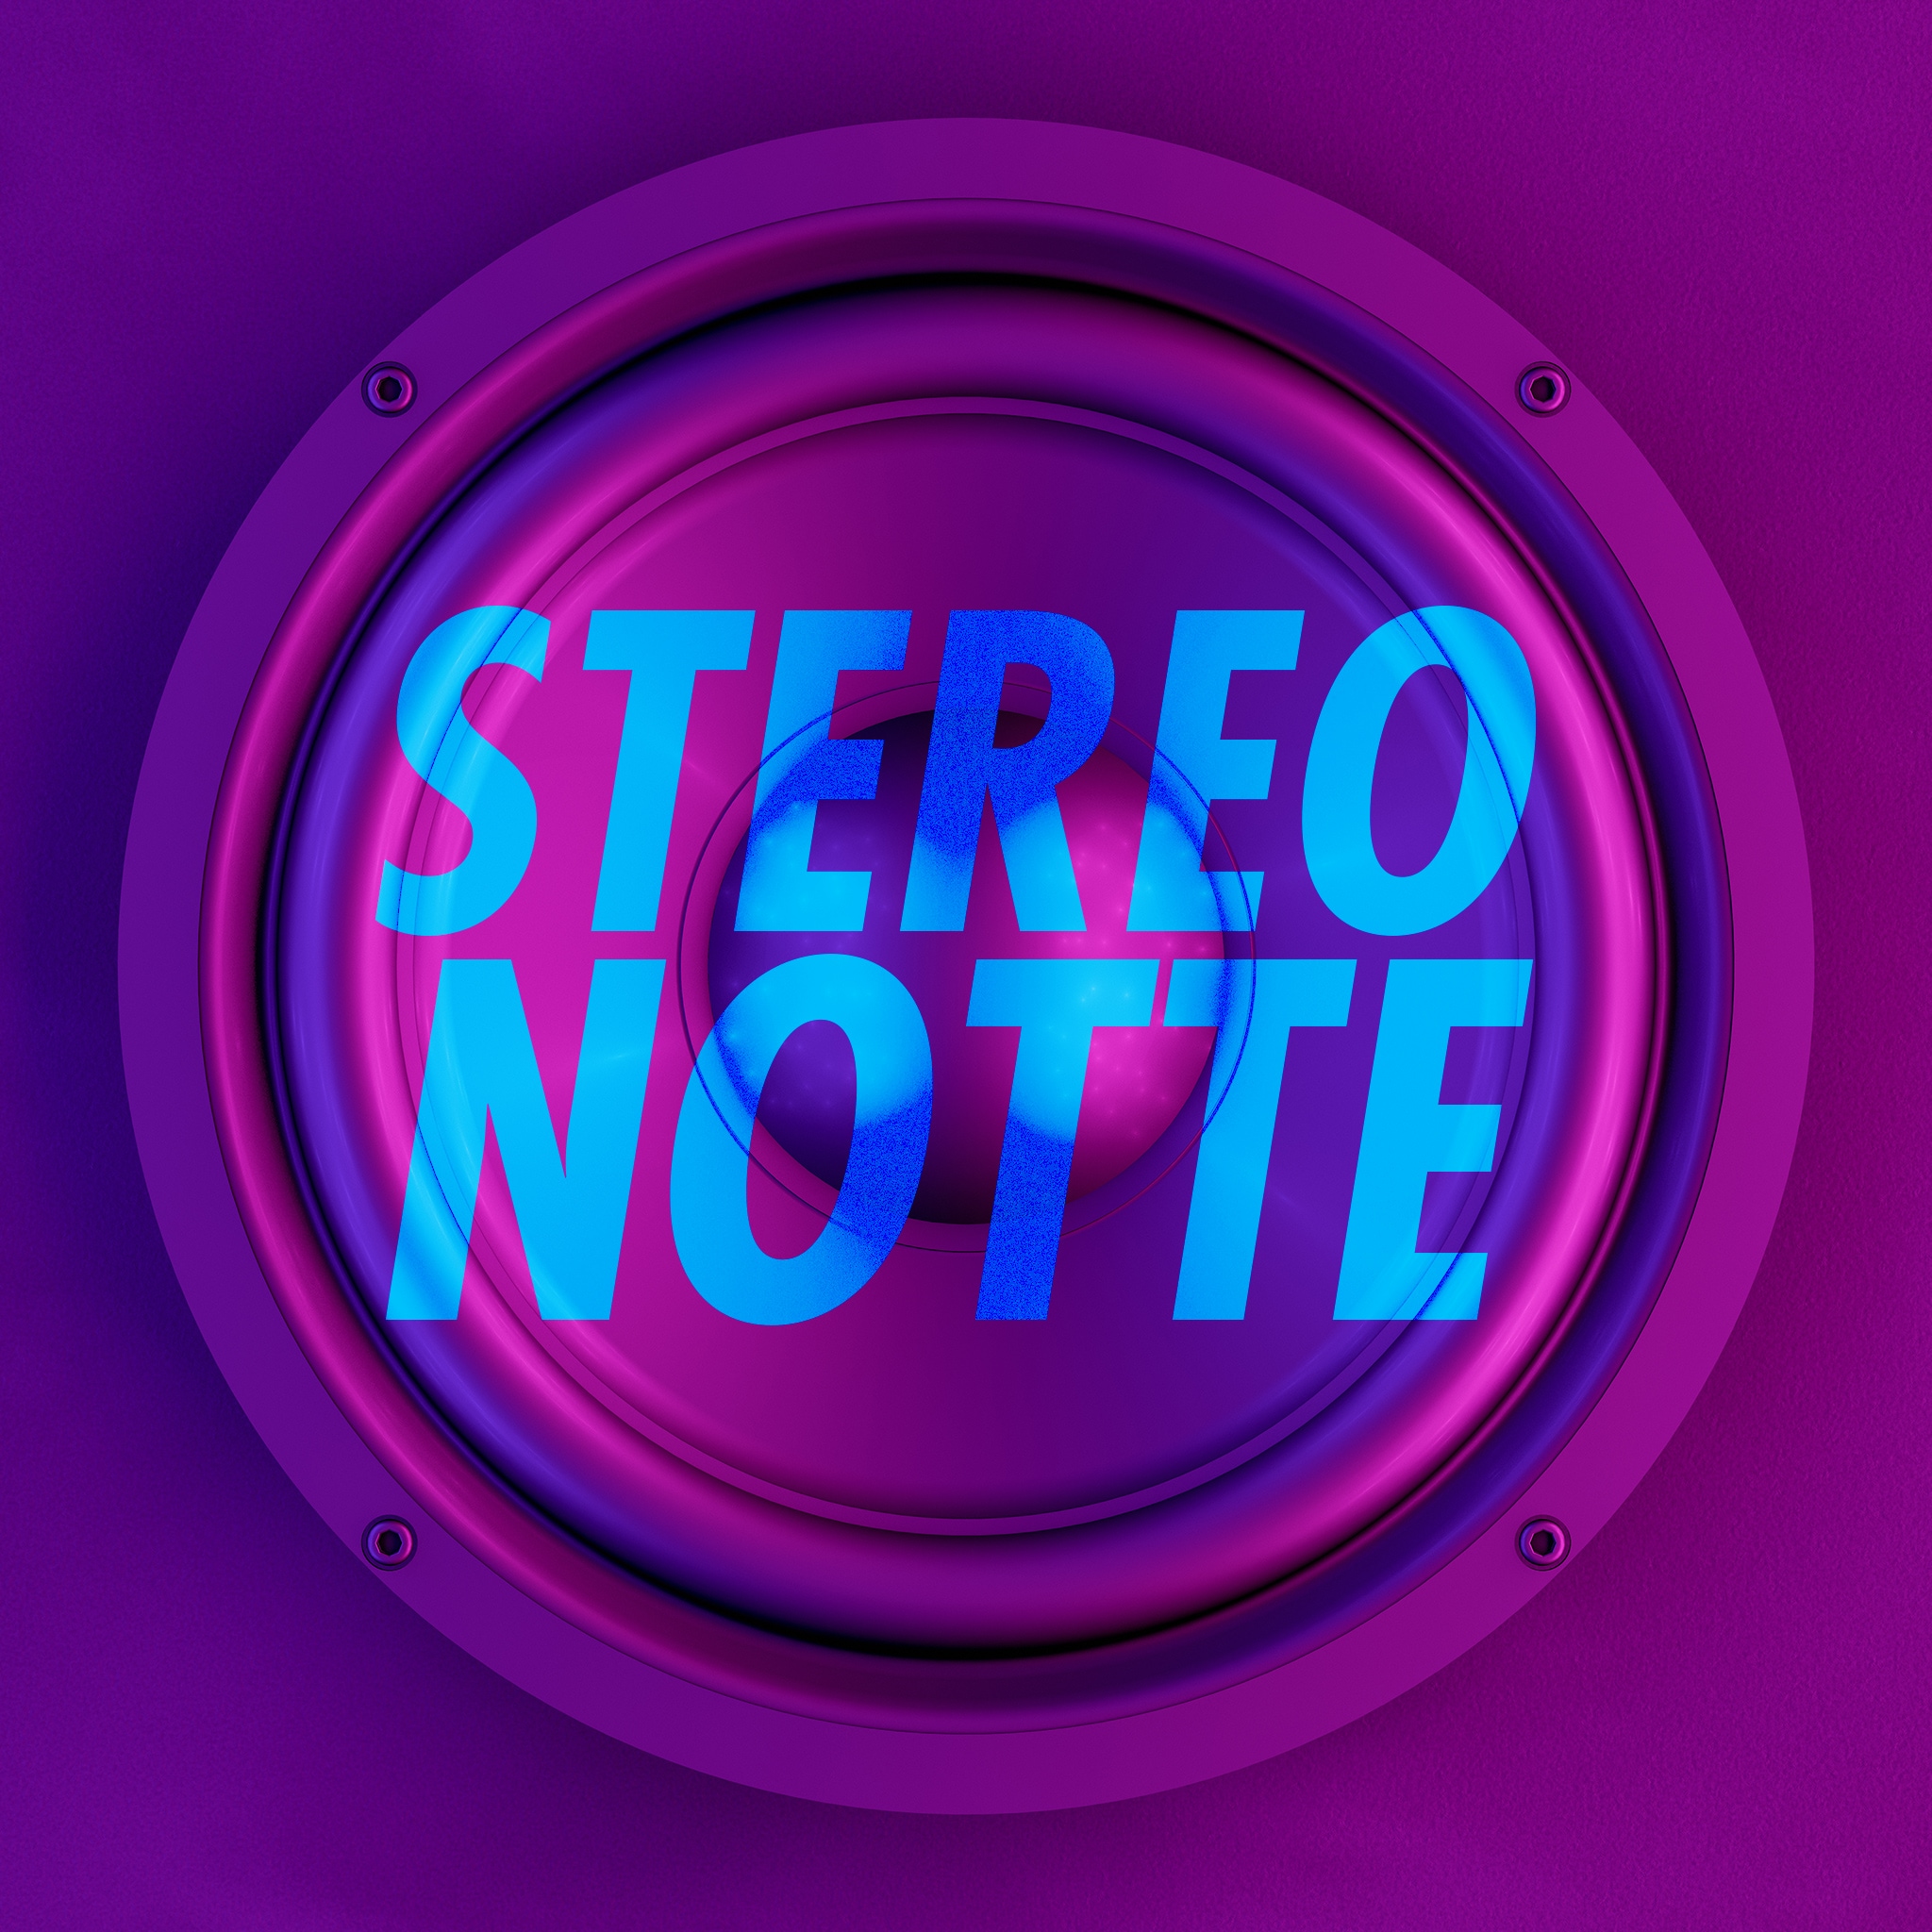 Rai Radio 1 Stereonotte Brasil